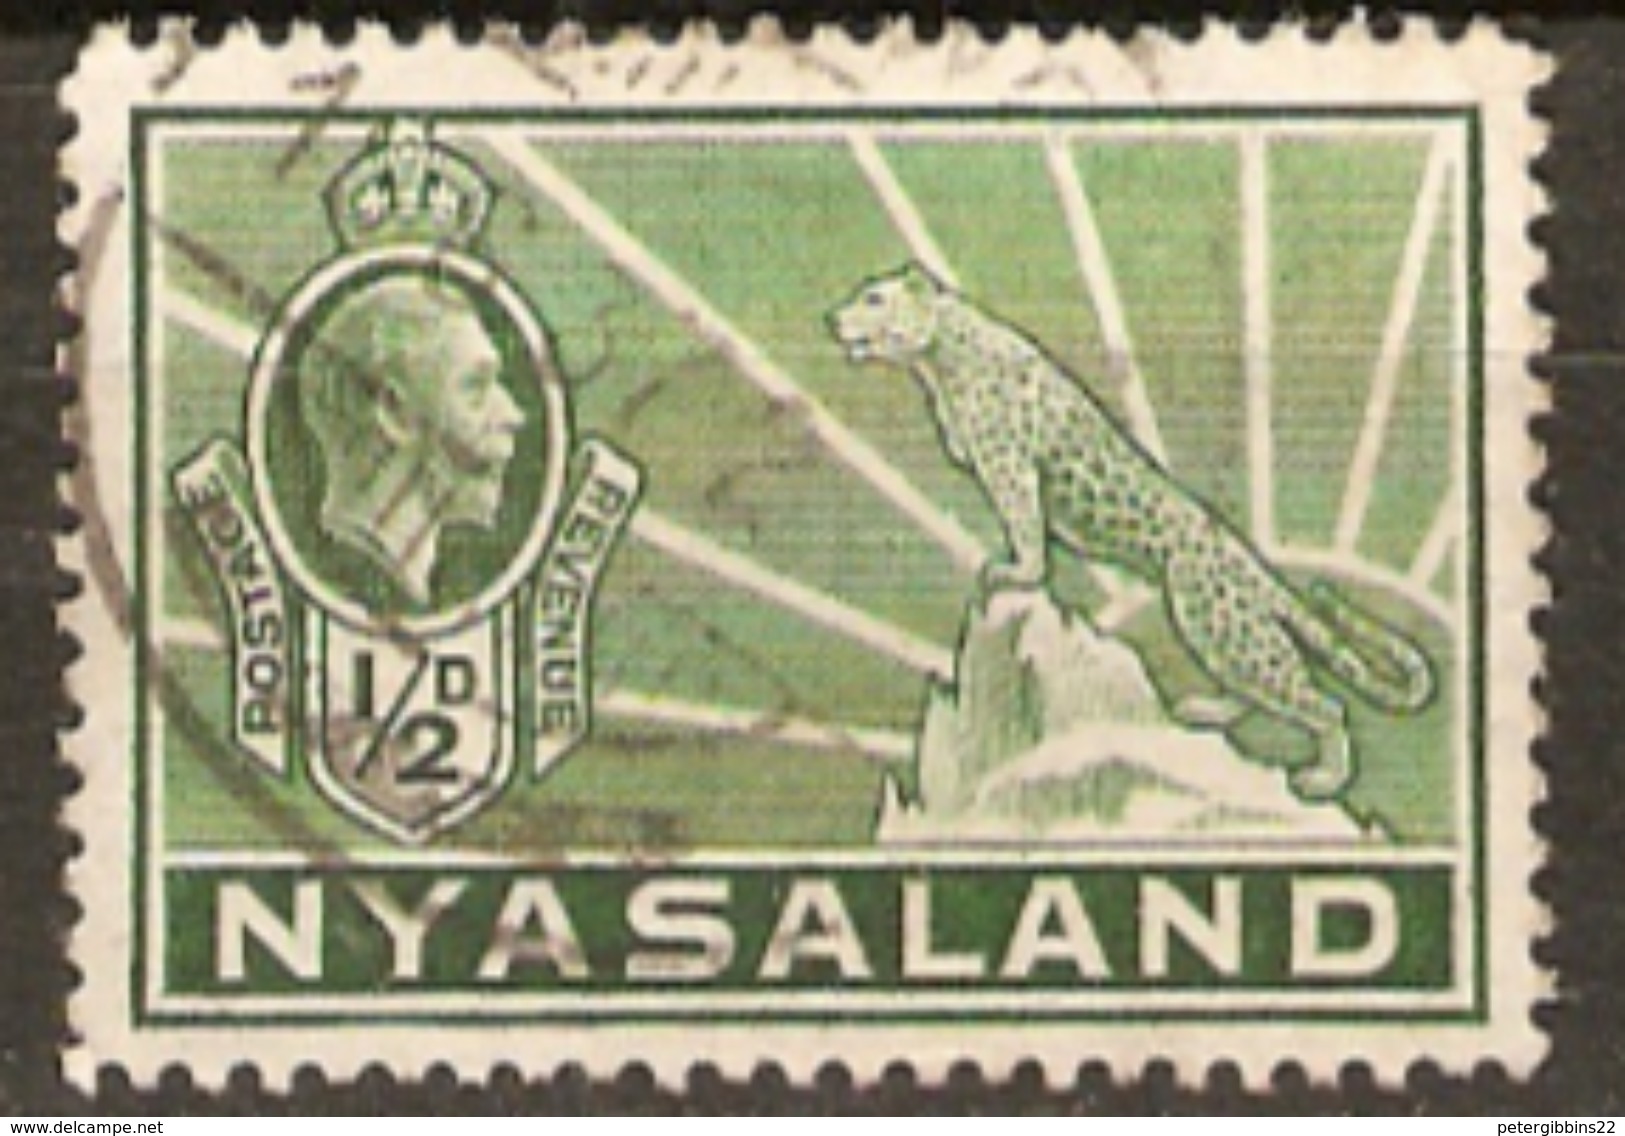 Nyasaland 1934 SG 114 1/2d Fine Used - Nyassaland (1907-1953)